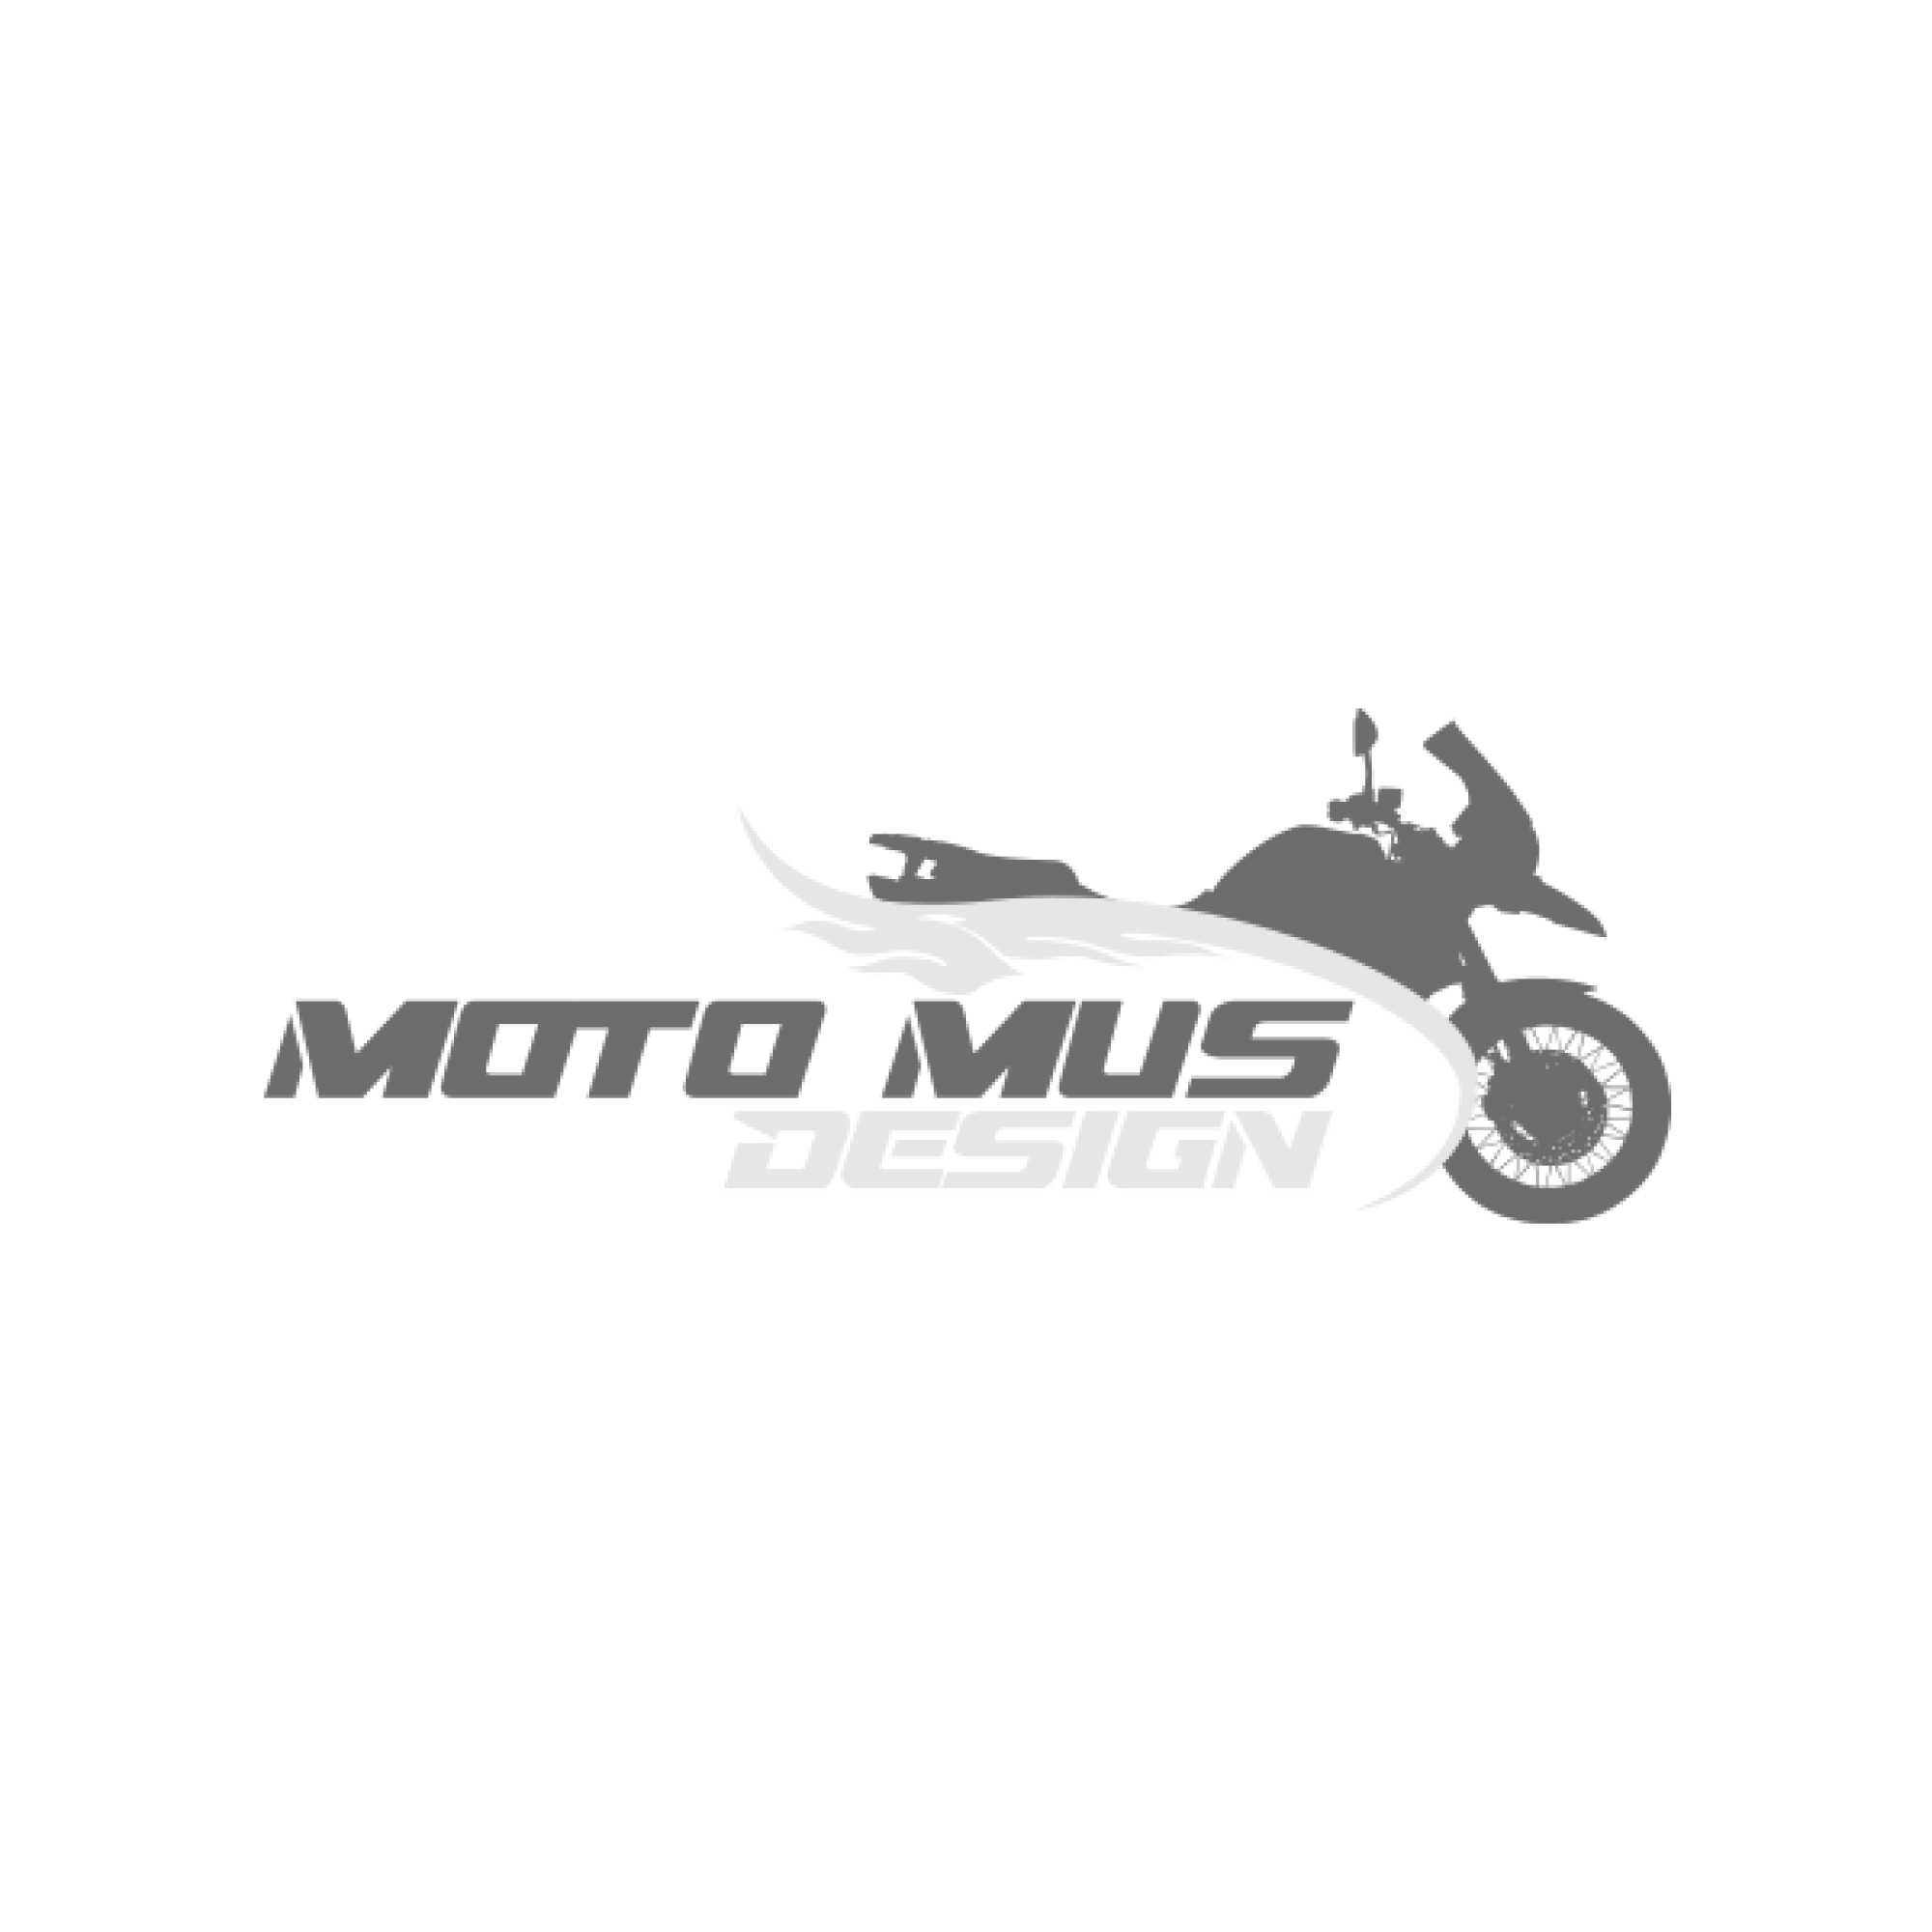 Kit montare Scarite EVO pe Honda / BMW / Triumph - models. Argintiu [1]